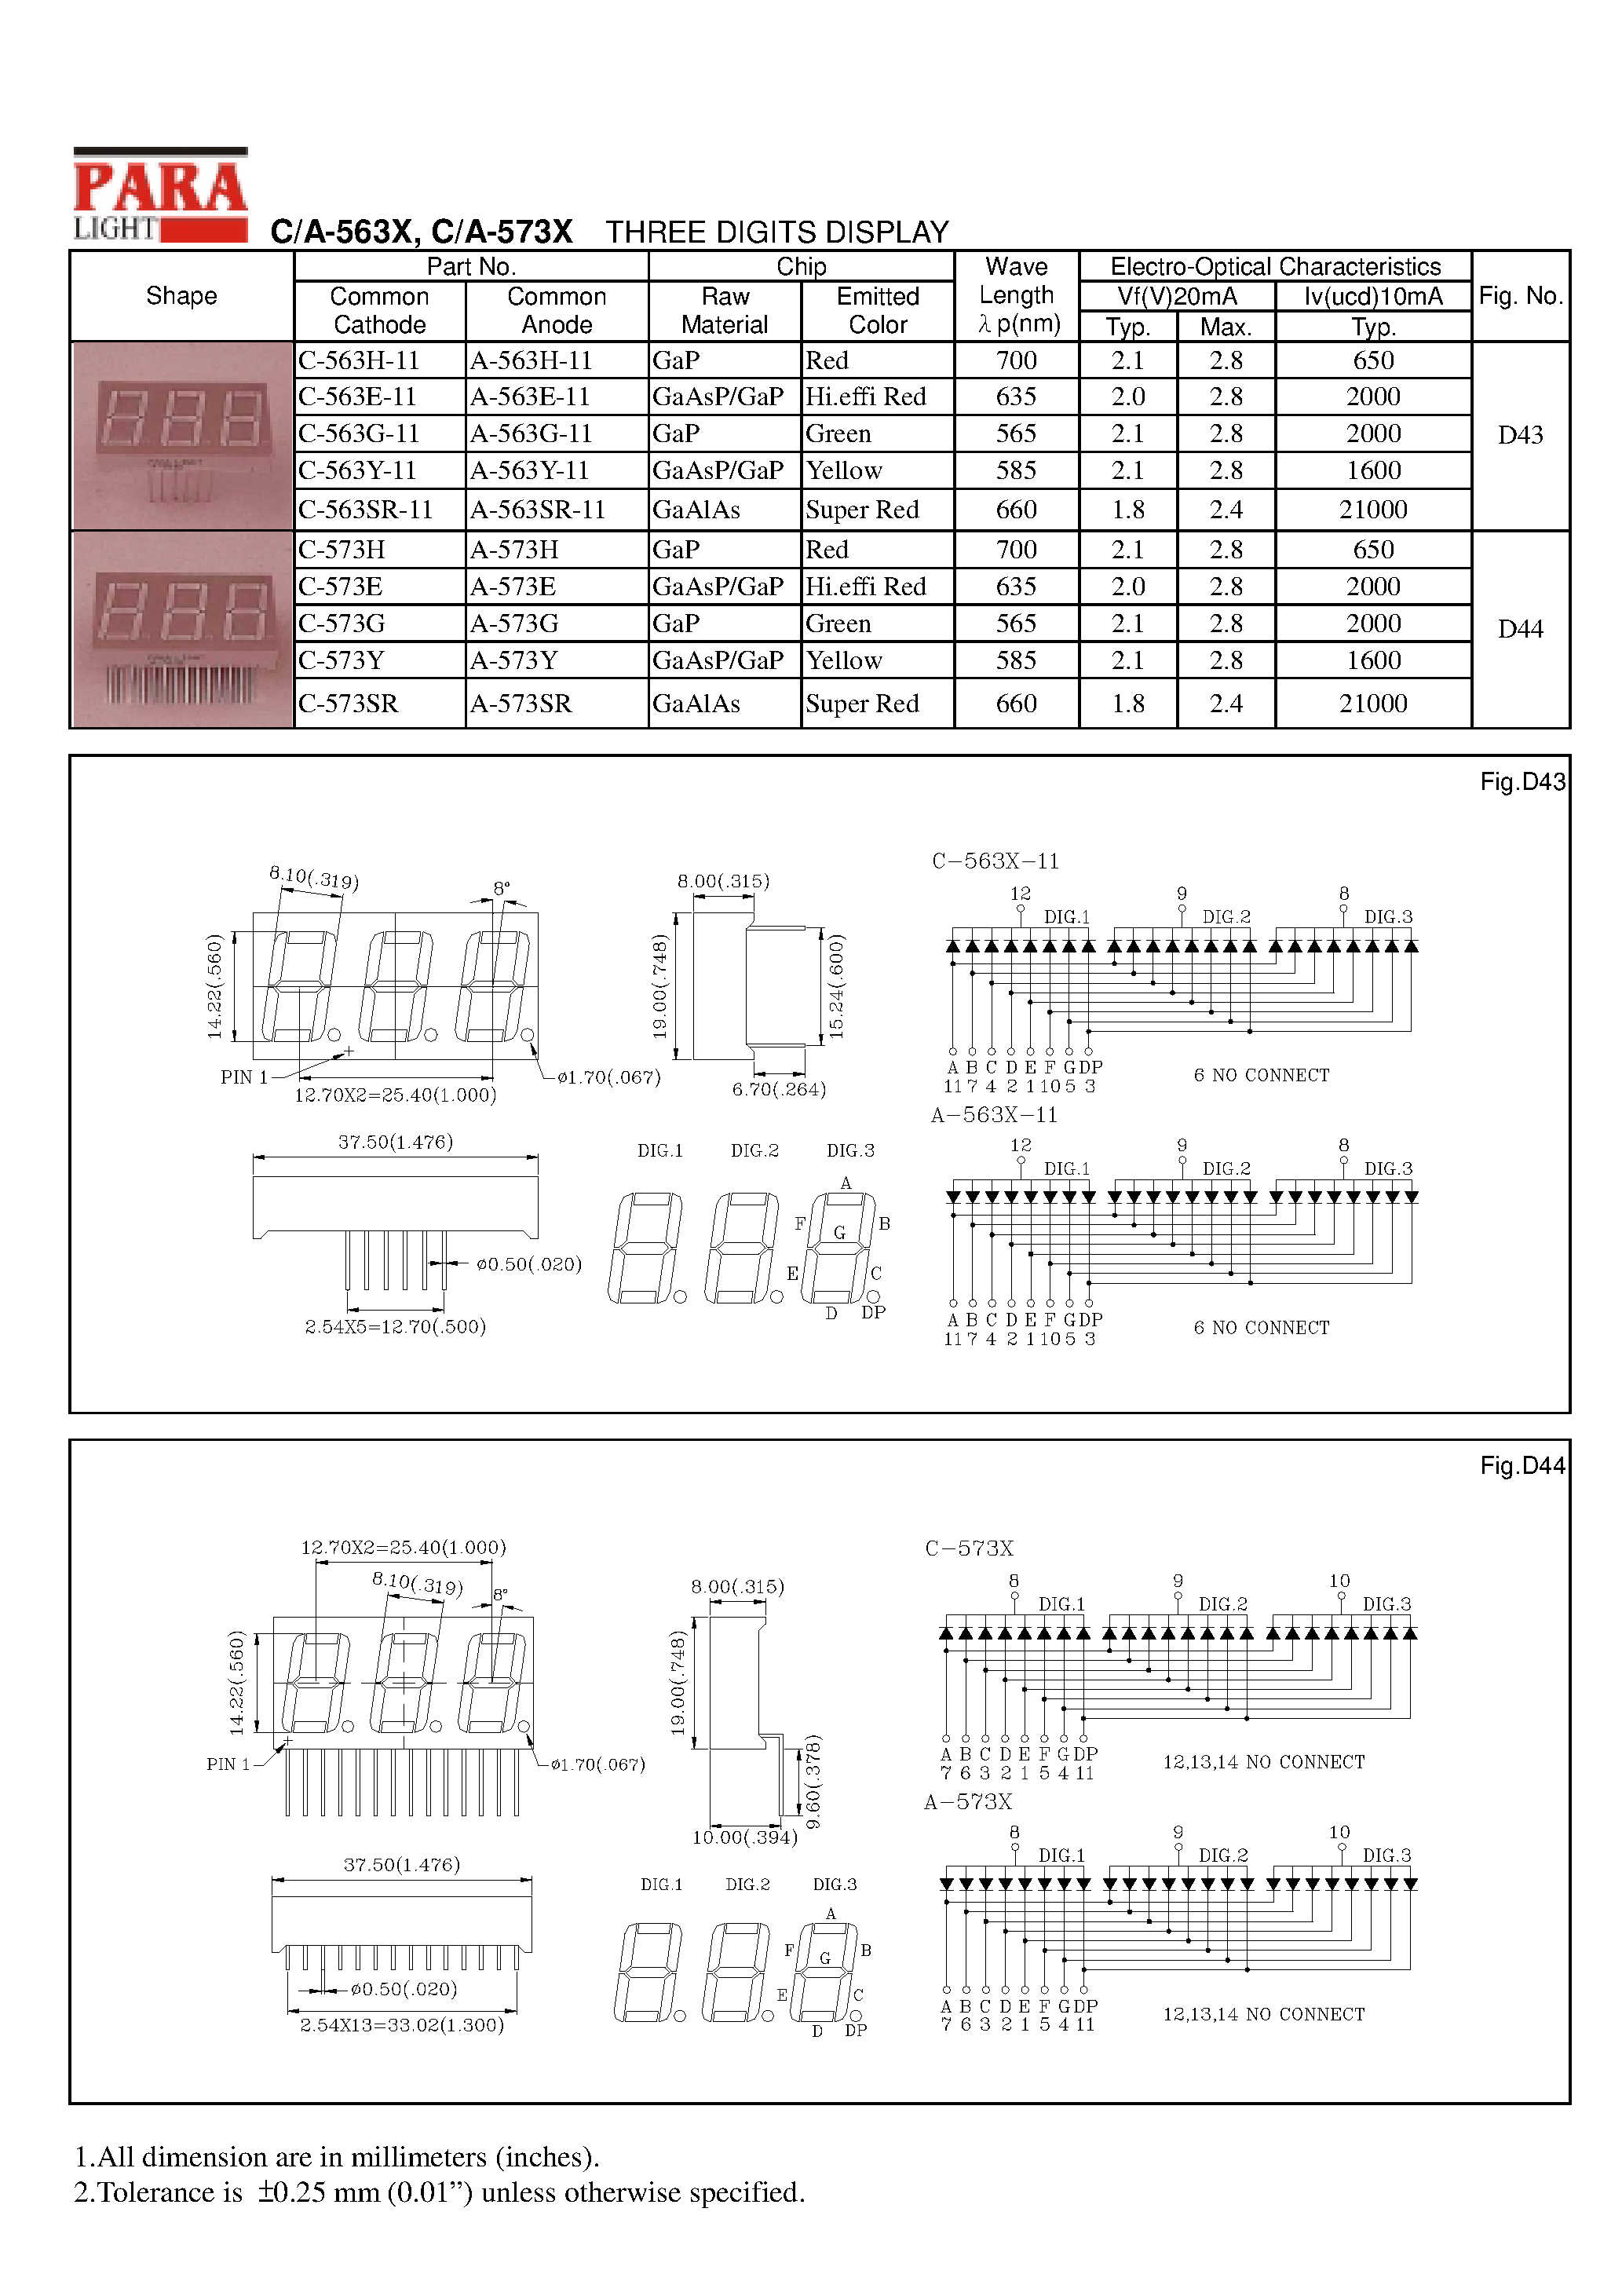 Datasheet A-563Y-11 - THREE DIGITS DISPLAY page 1